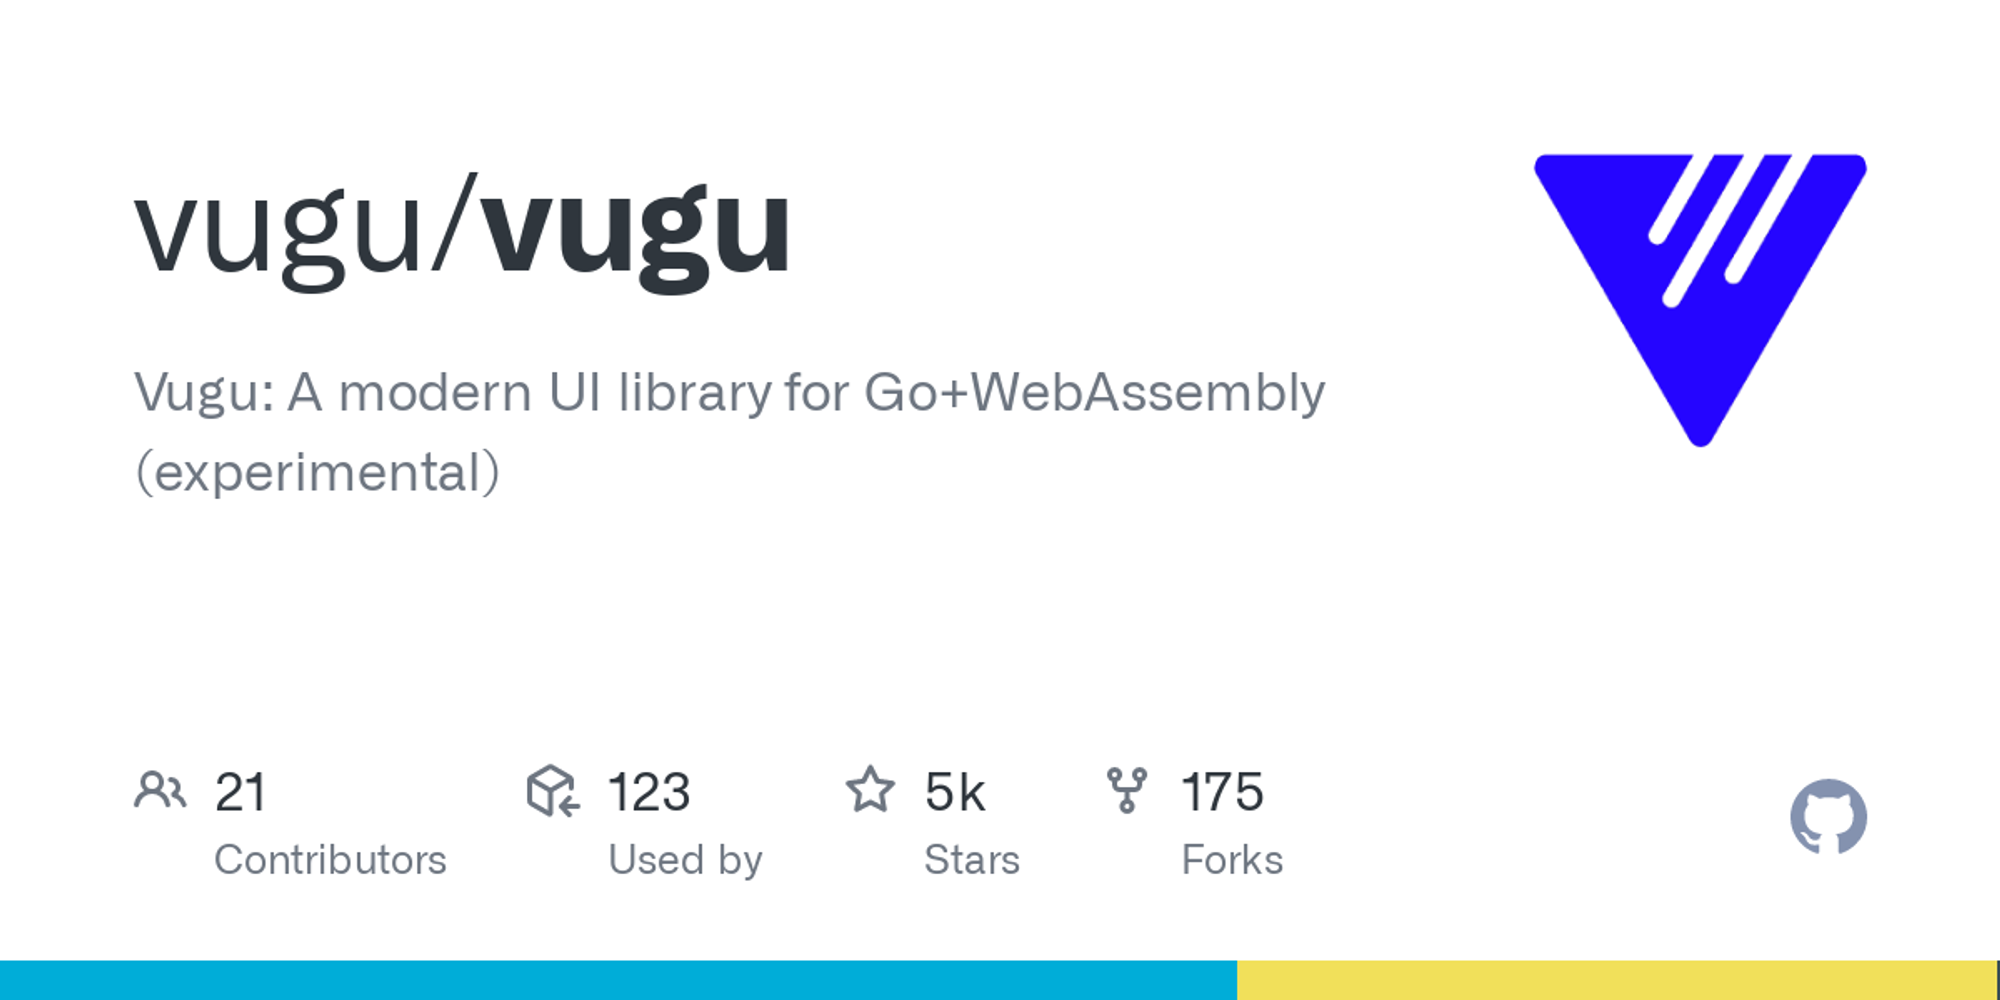 GitHub - vugu/vugu: Vugu: A modern UI library for Go+WebAssembly (experimental)